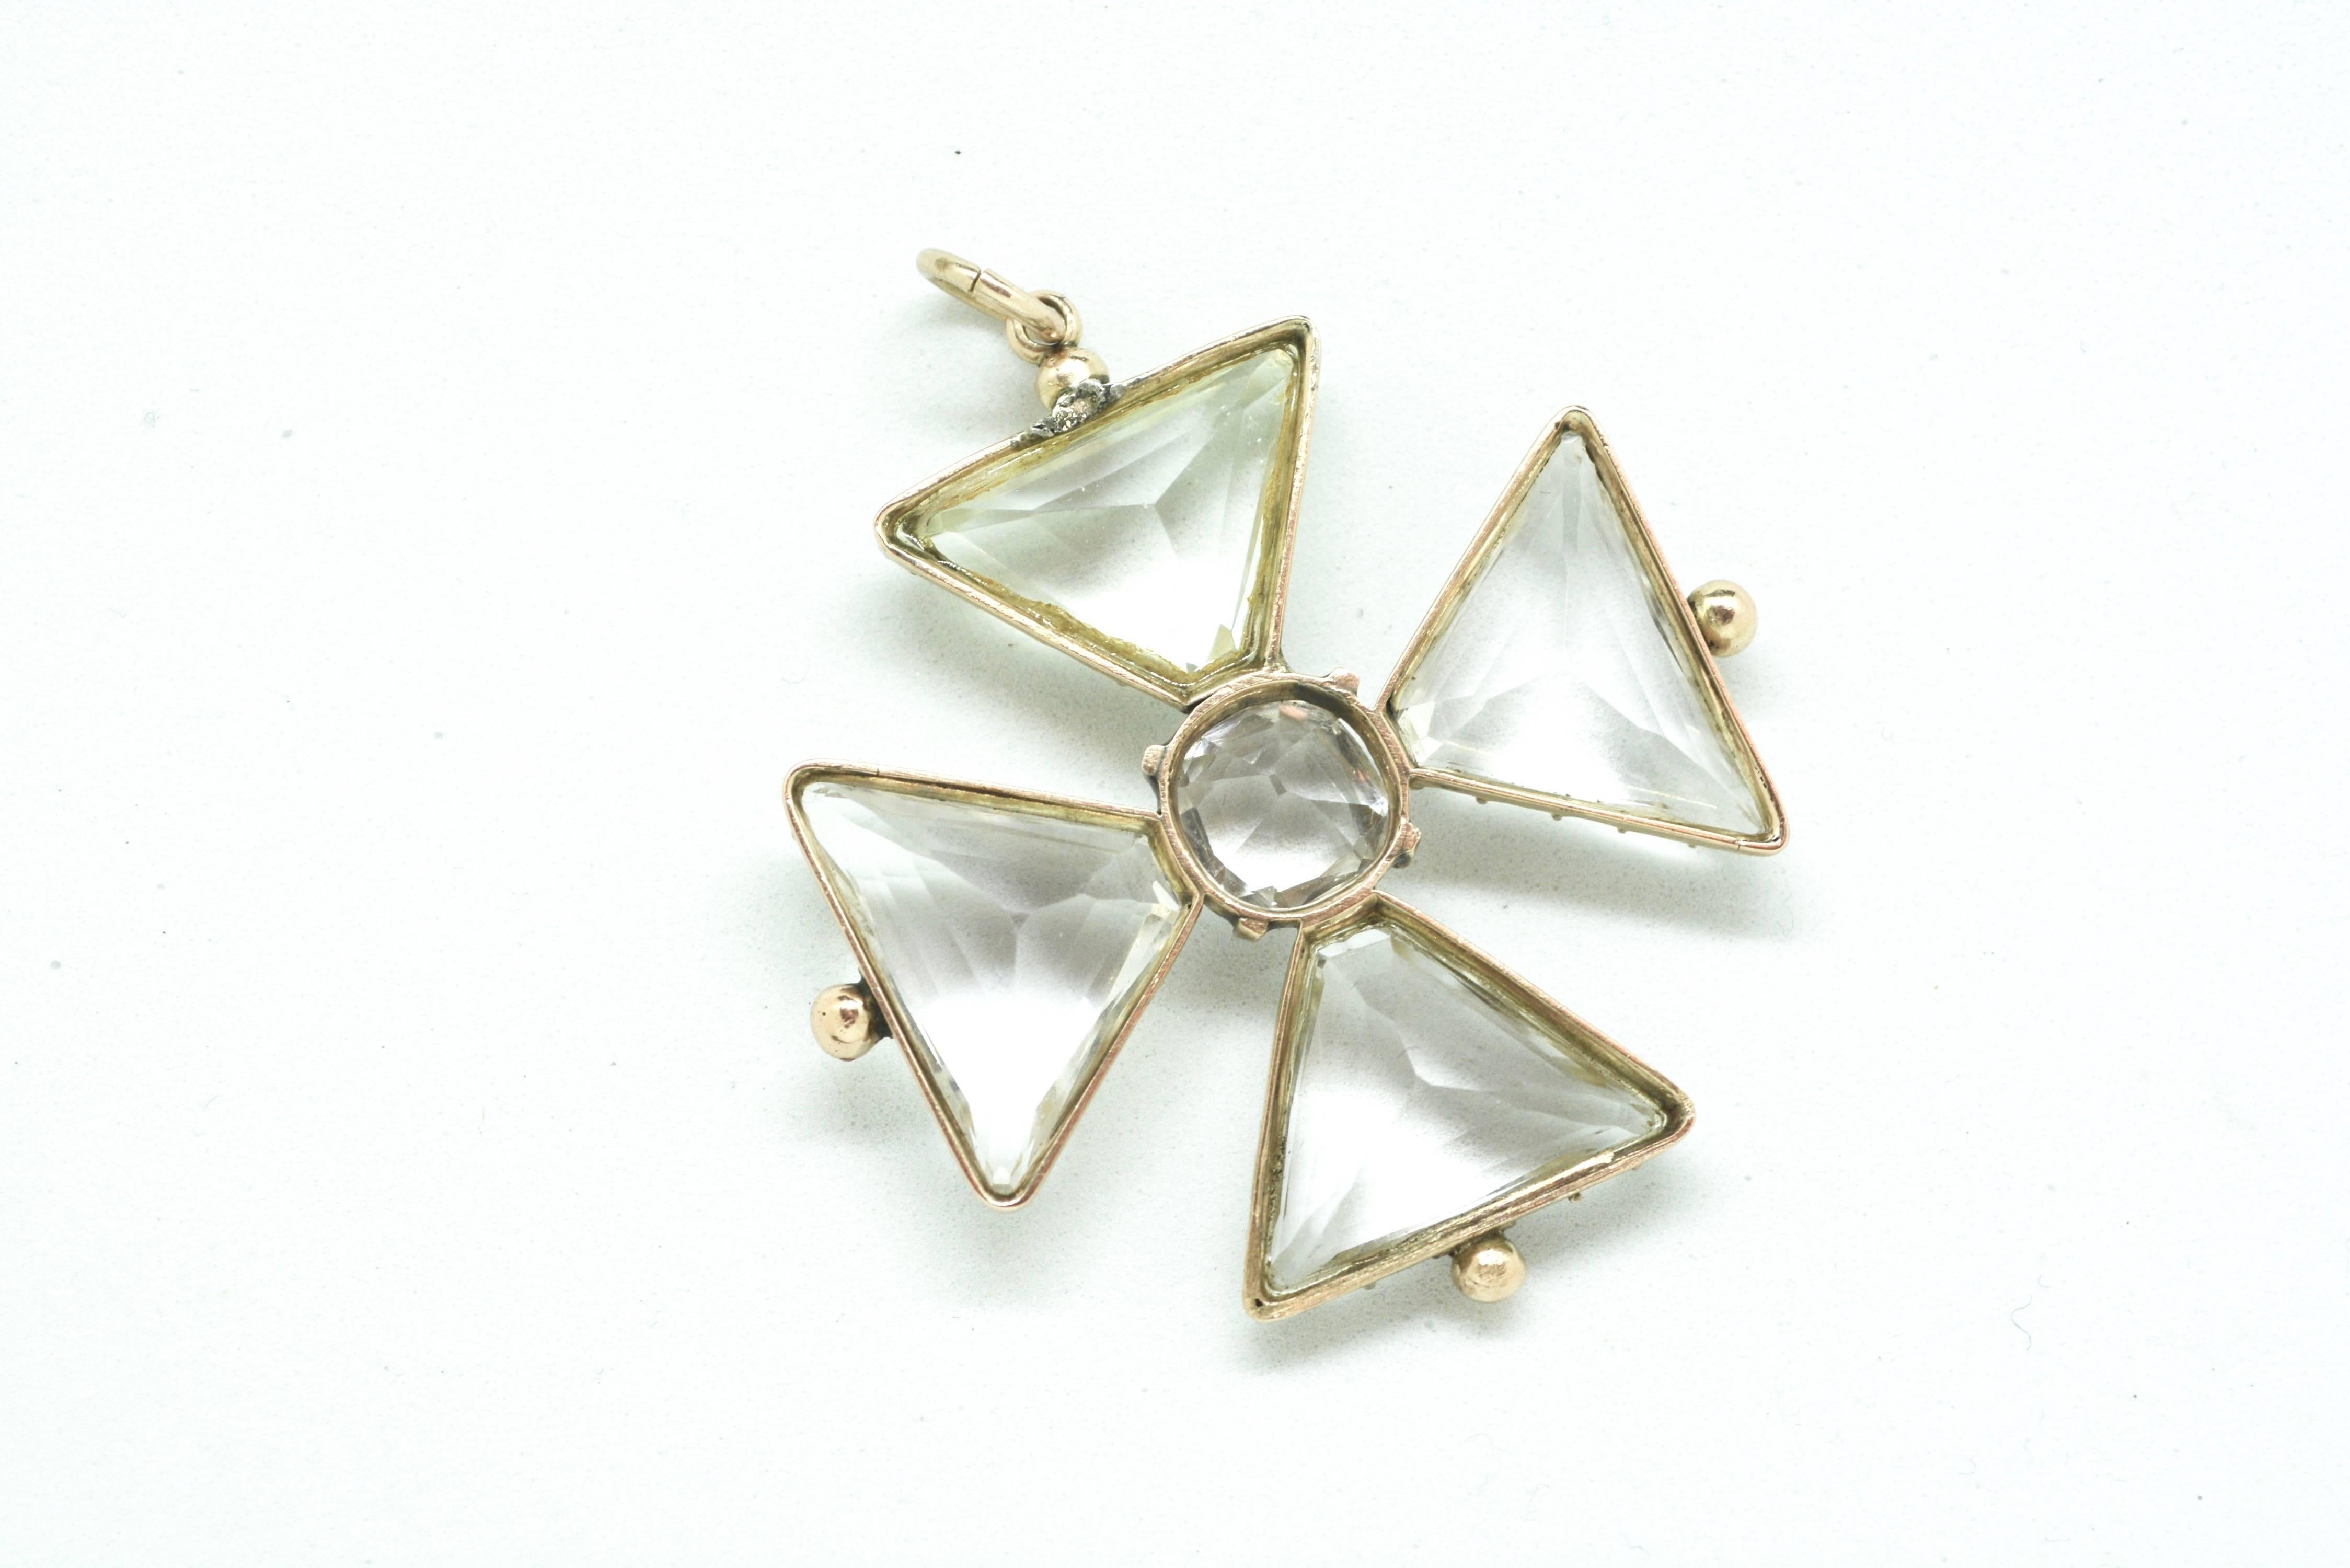 Lovely antque Maltese cross style crystal brooch, set in 14k. 